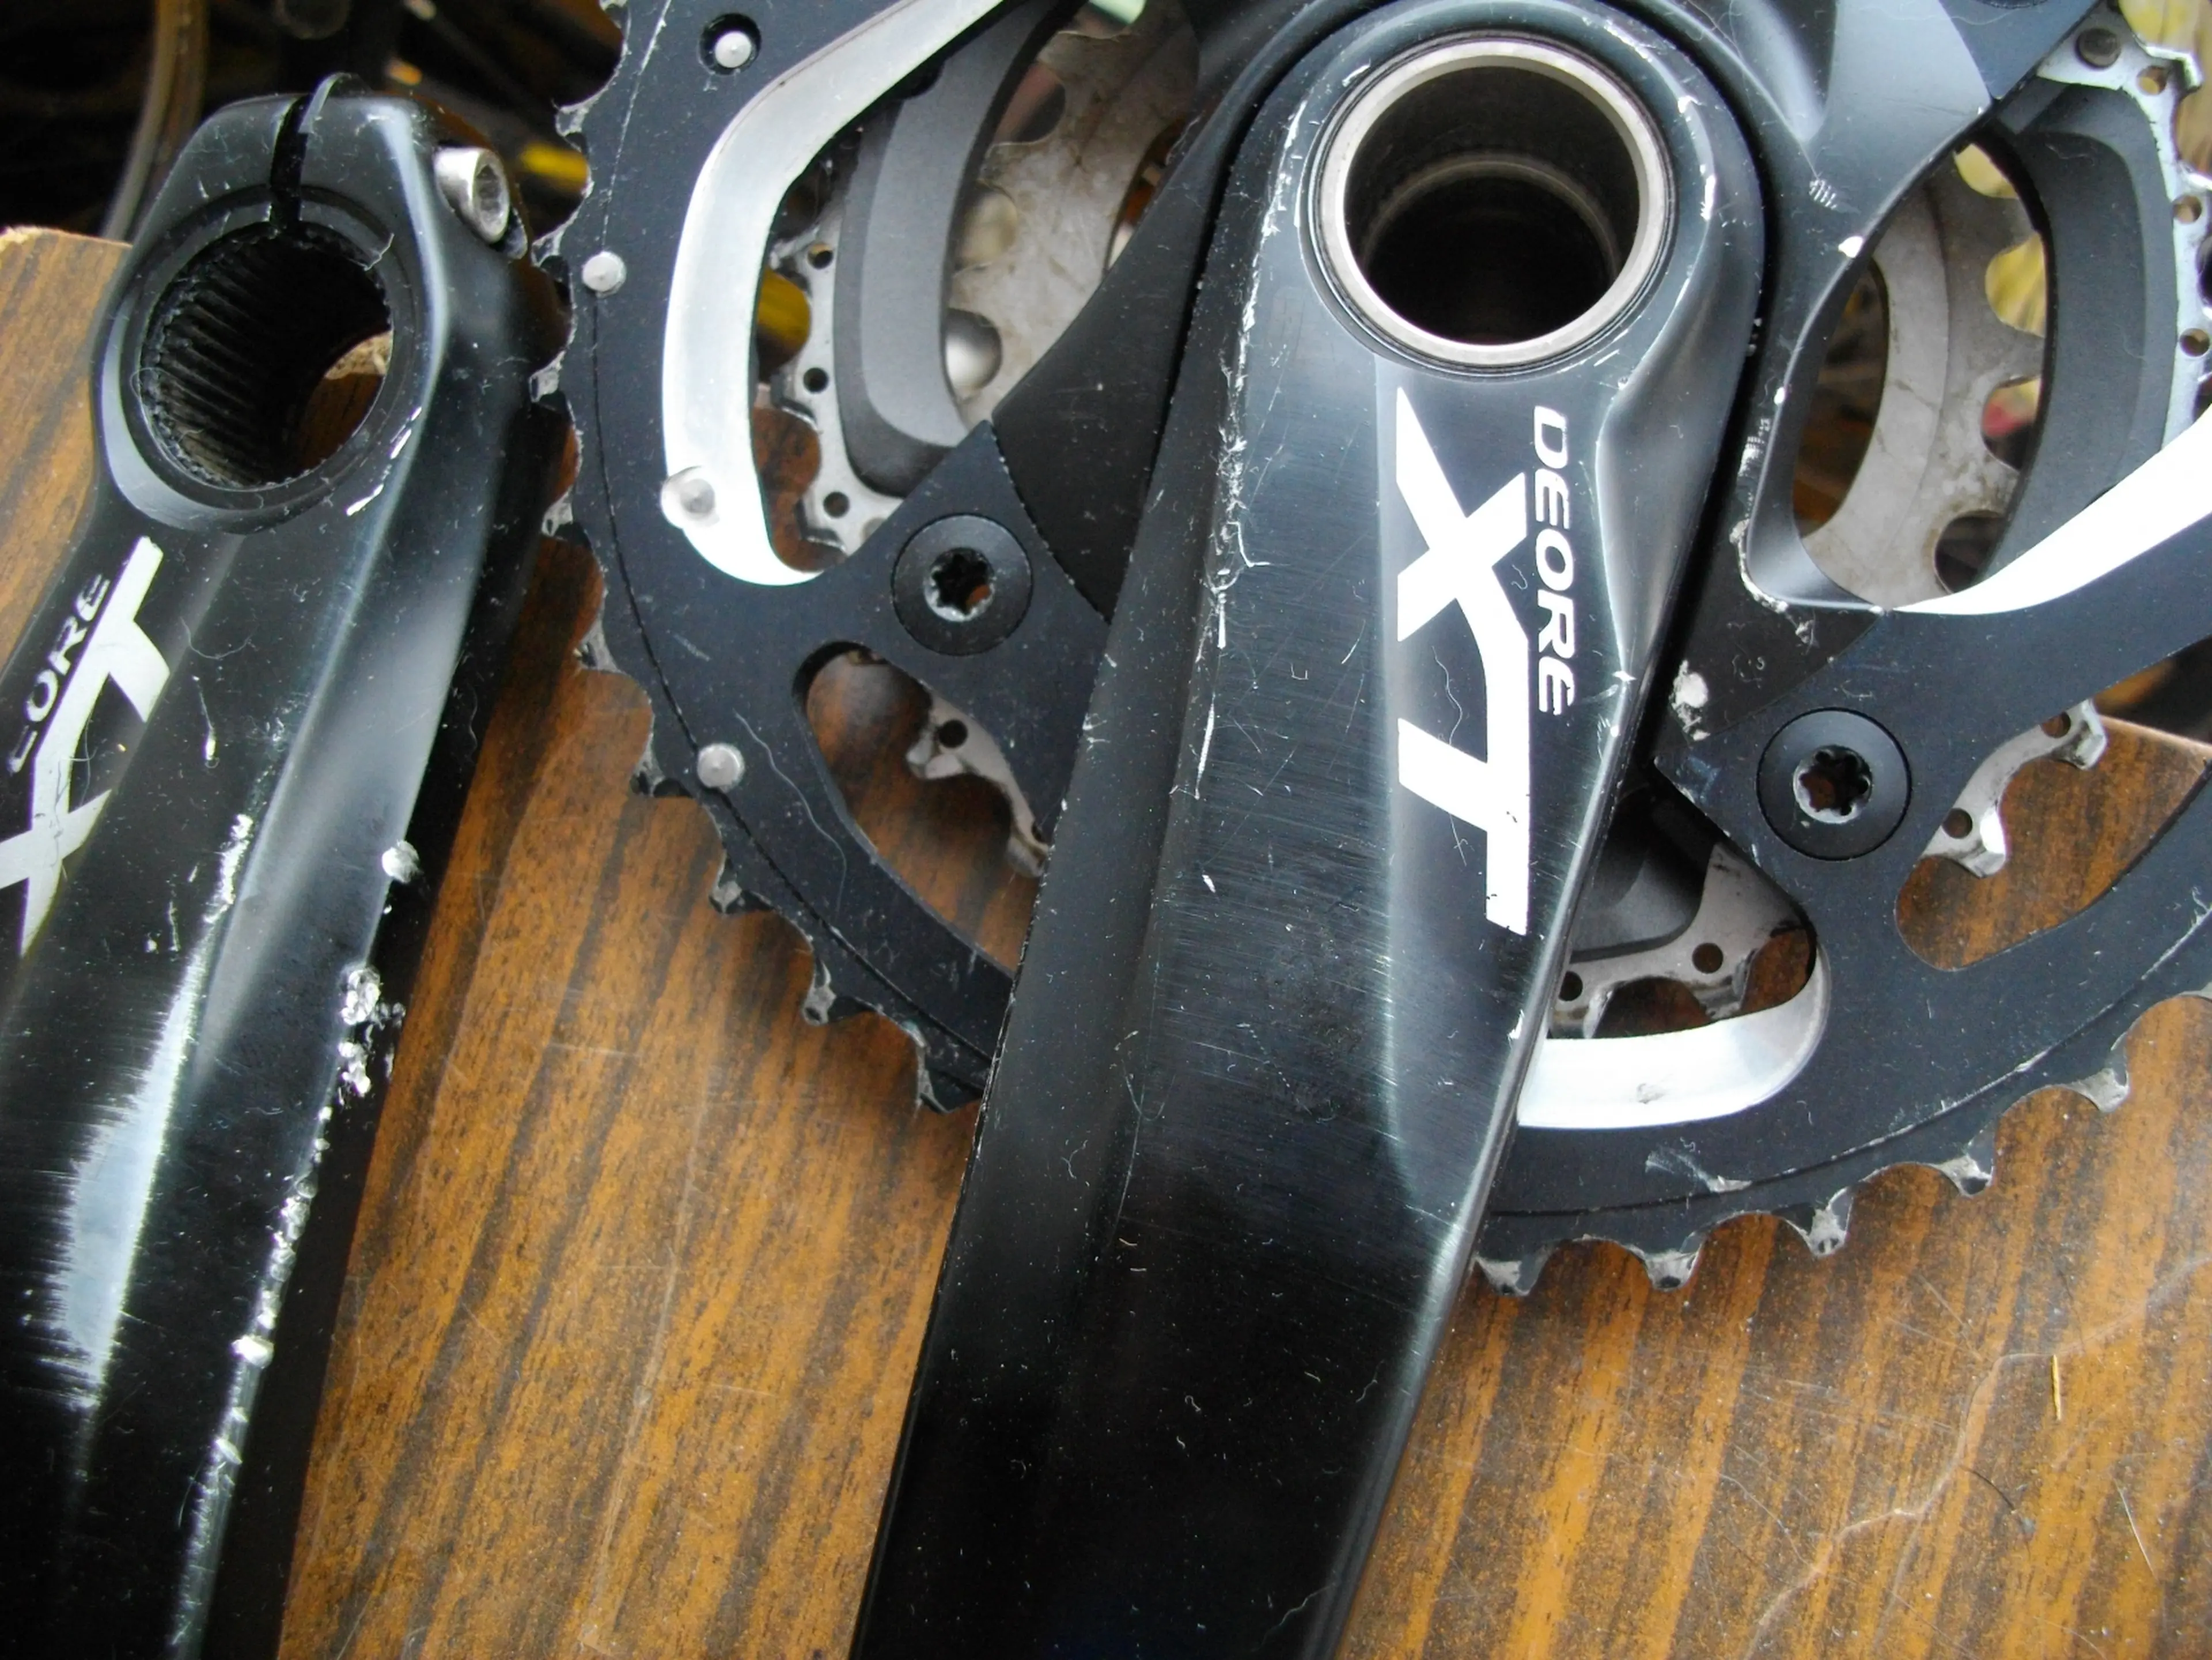 7. Shimano xt m780 + pedale Sixpack